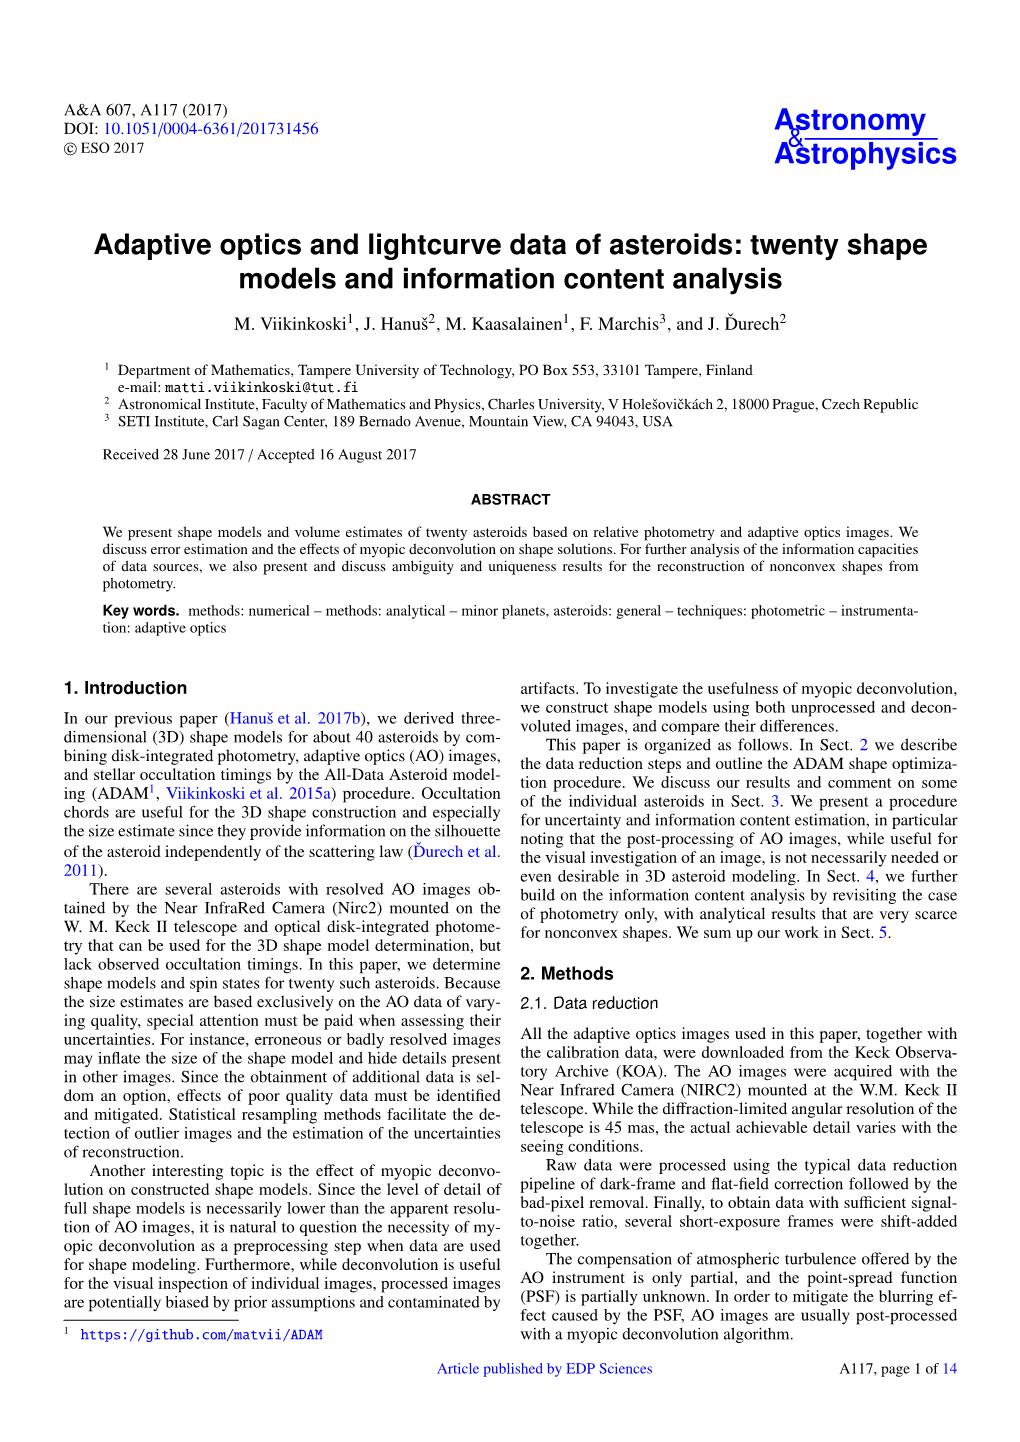 Adaptive Optics and Lightcurve Data of Asteroids: Twenty Shape Models and Information Content Analysis